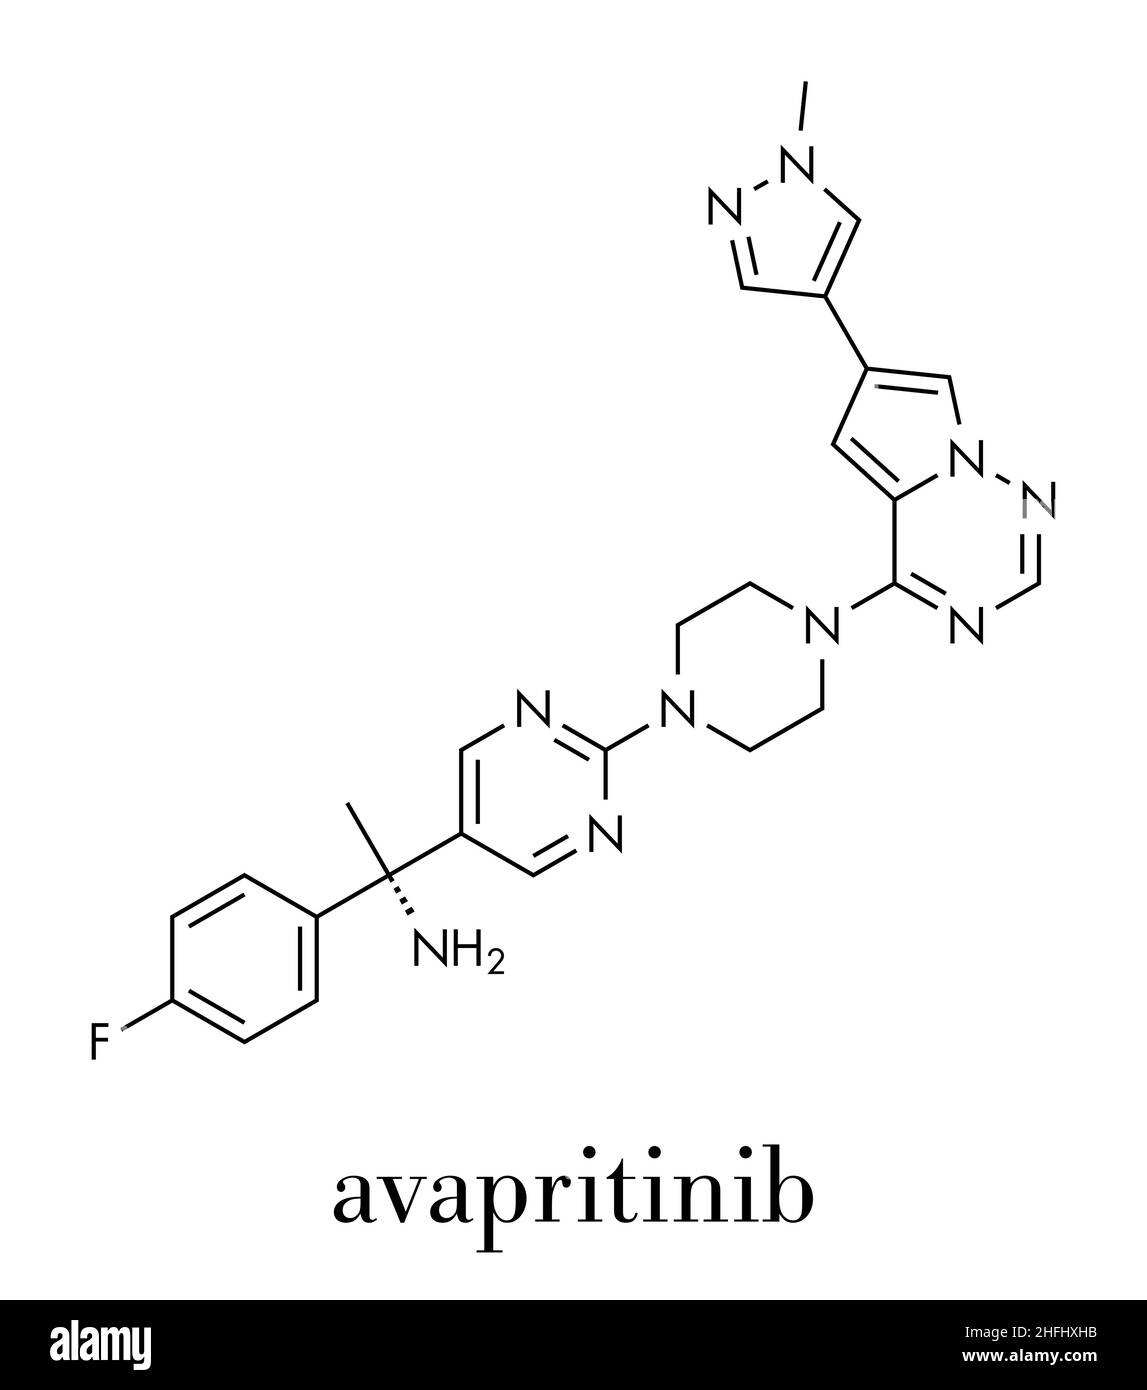 Avapritinib cancer drug molecule. Skeletal formula. Stock Vector